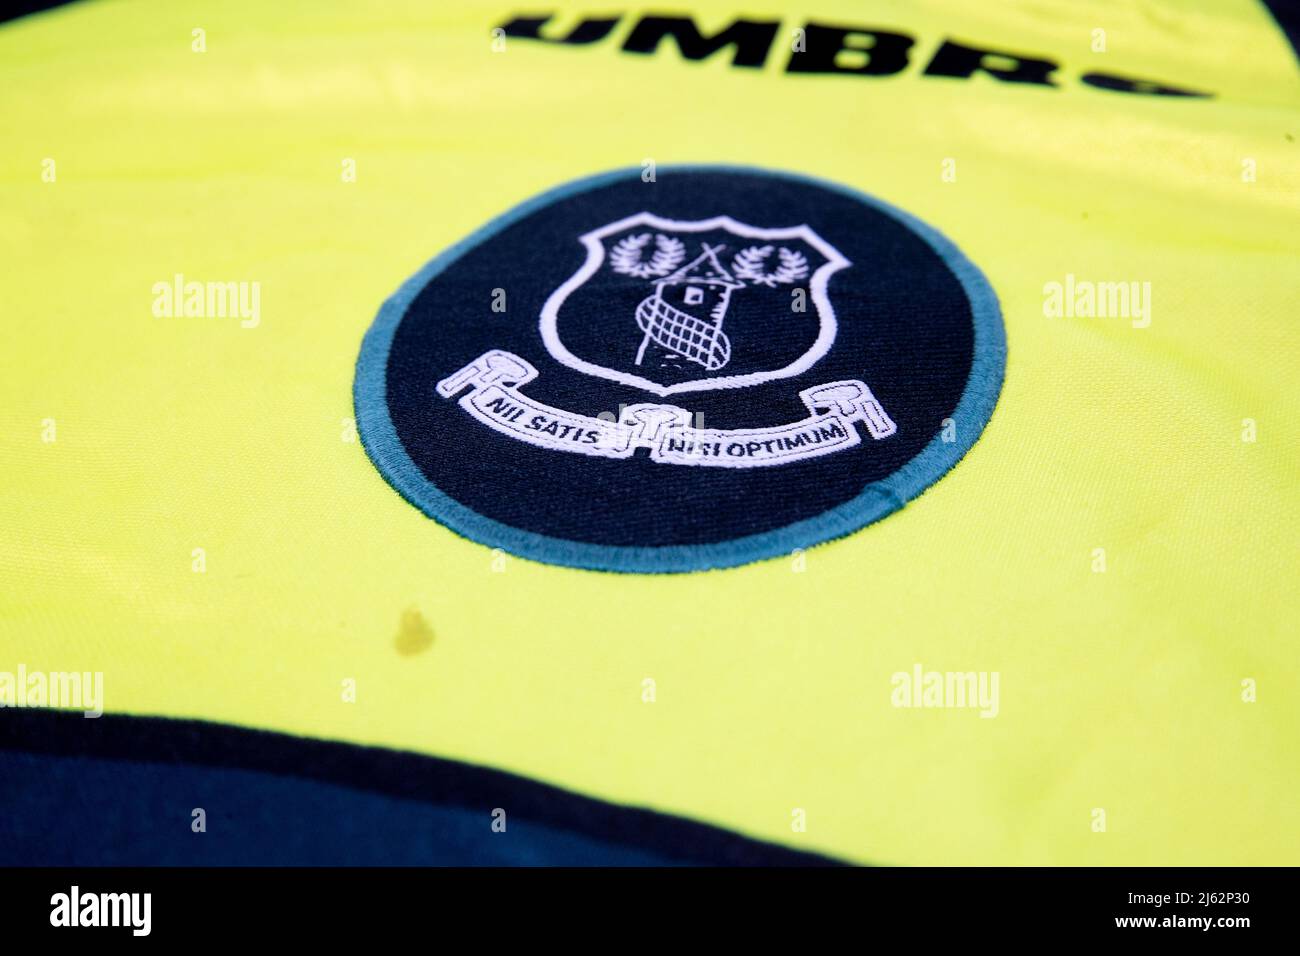 Everton logo badge on an Umbro football shirt Stock Photo